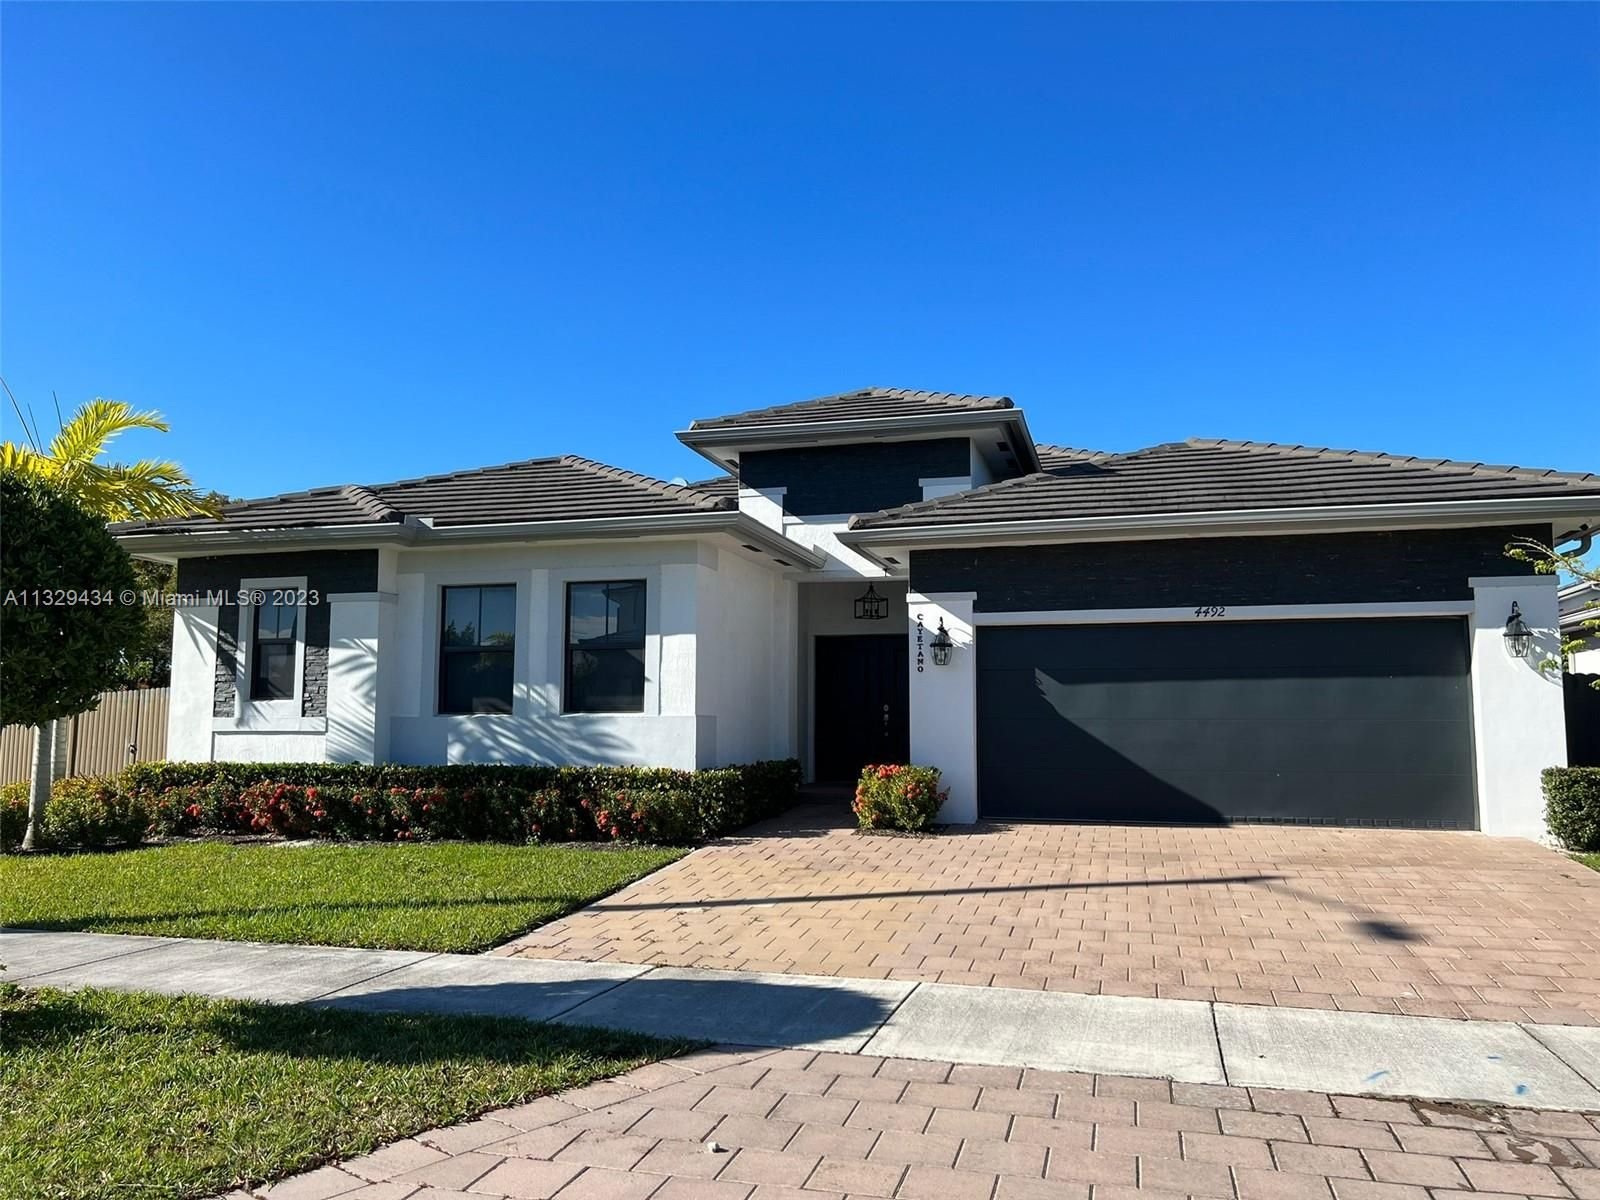 Real estate property located at 4492 159th Ct, Miami-Dade County, Miami, FL